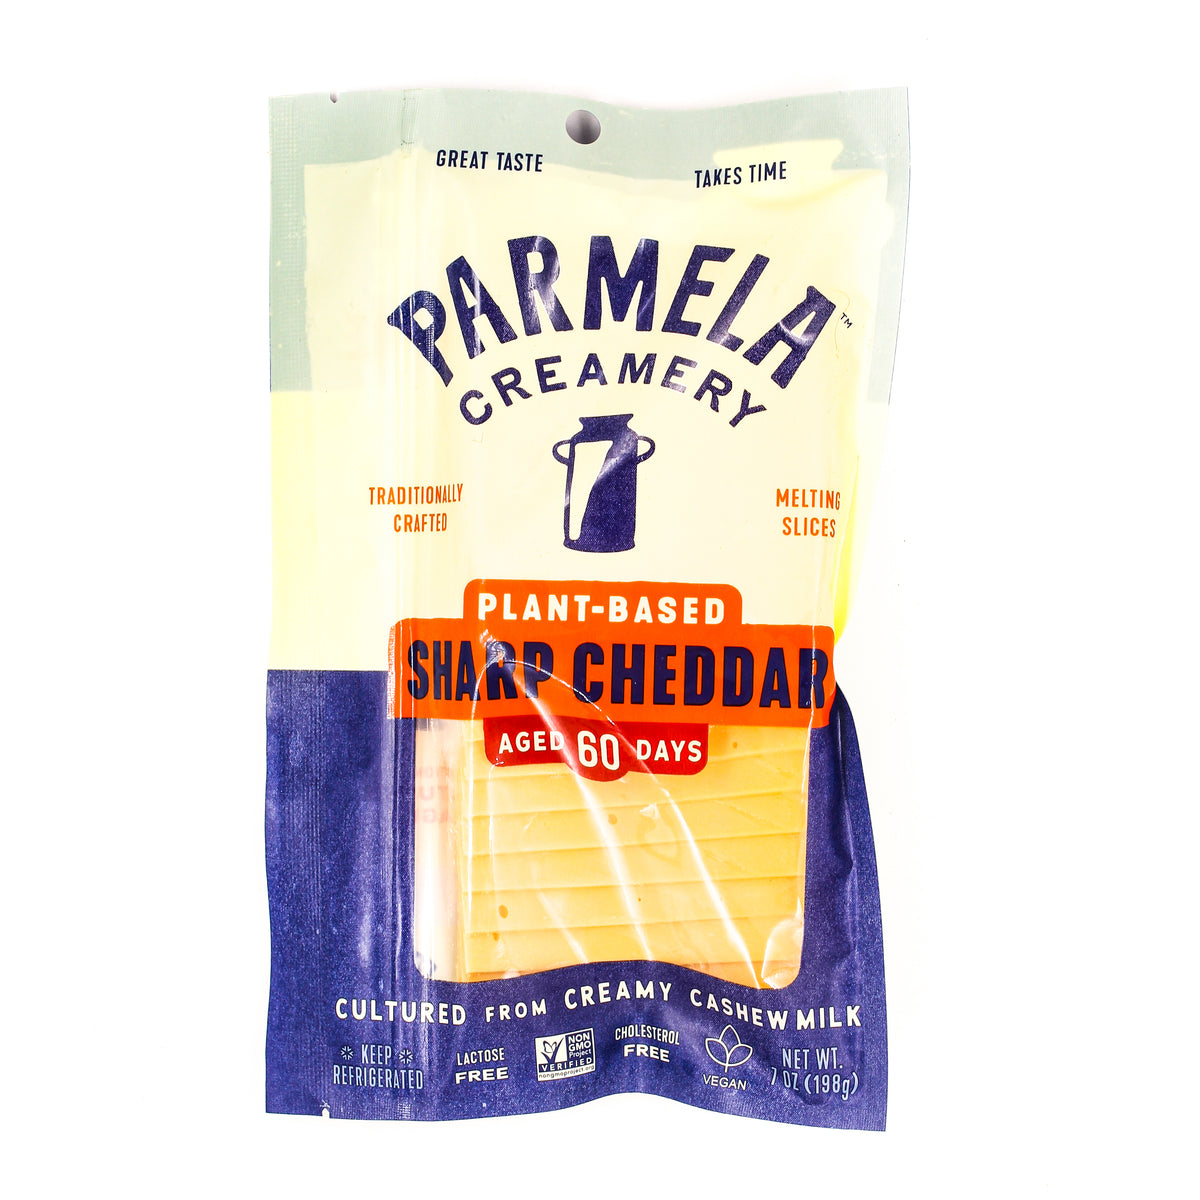 Parmela Creamery Slices Cheddar